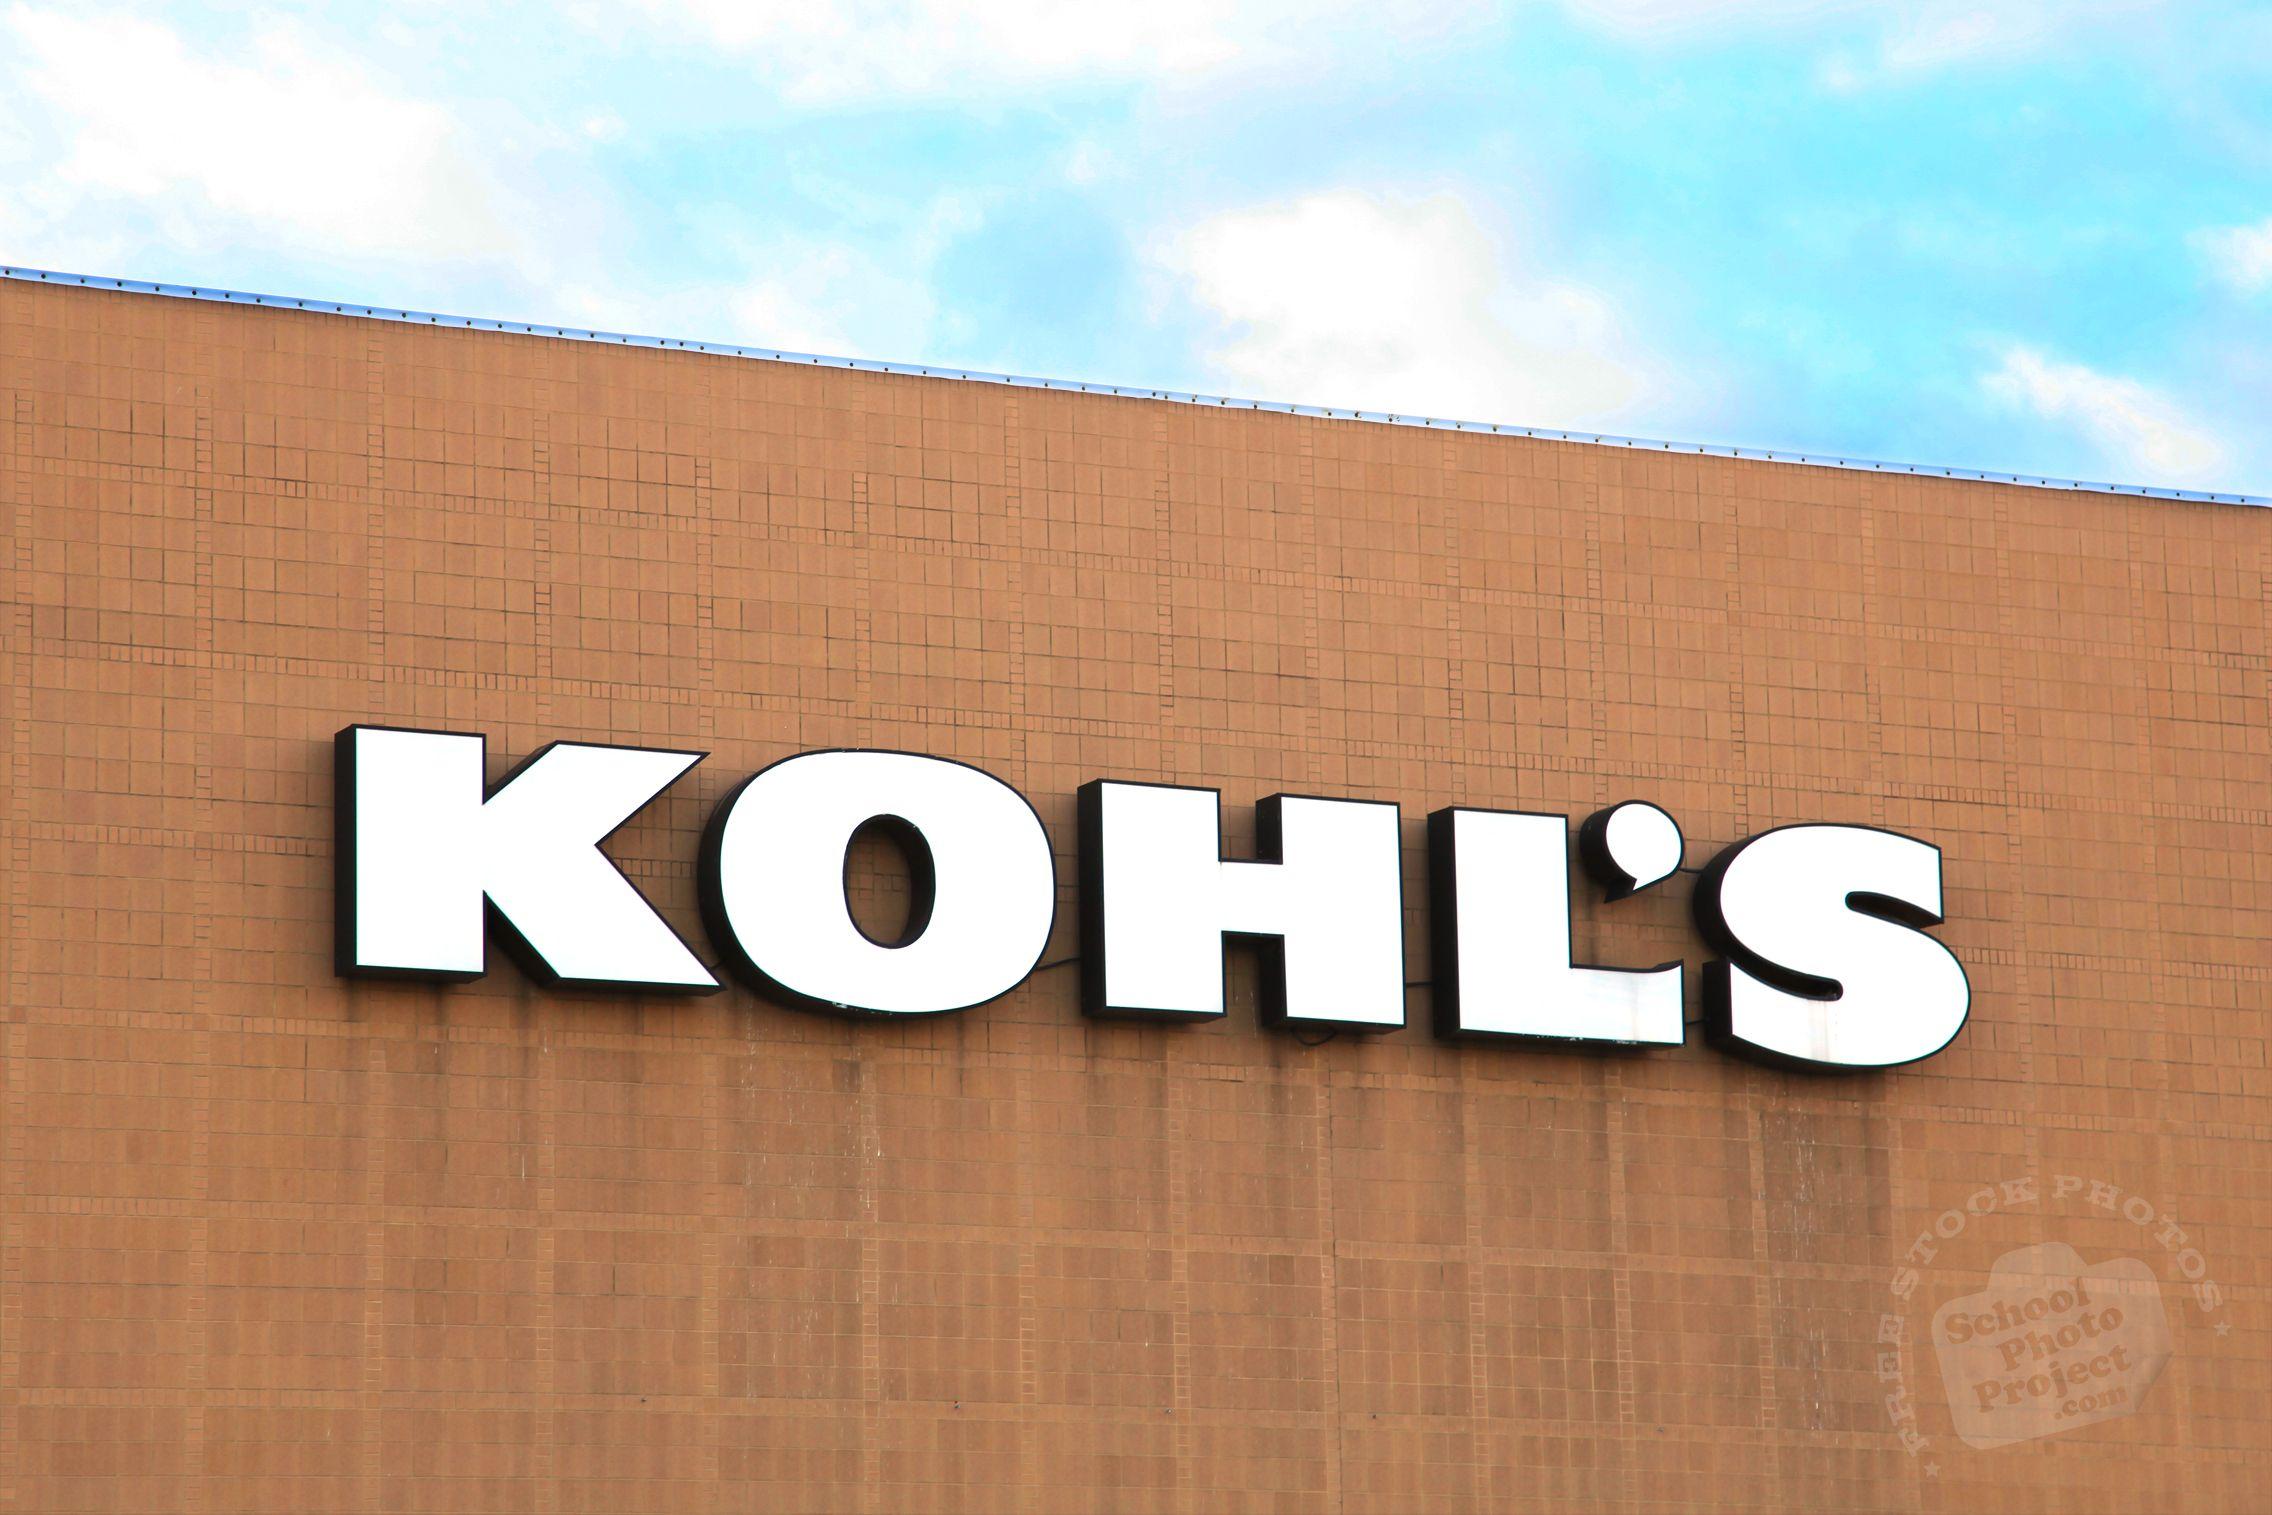 Famous Store Logo - FREE KOHL'S Logo, KOHL'S Identity, Popular Company's Brand Images ...